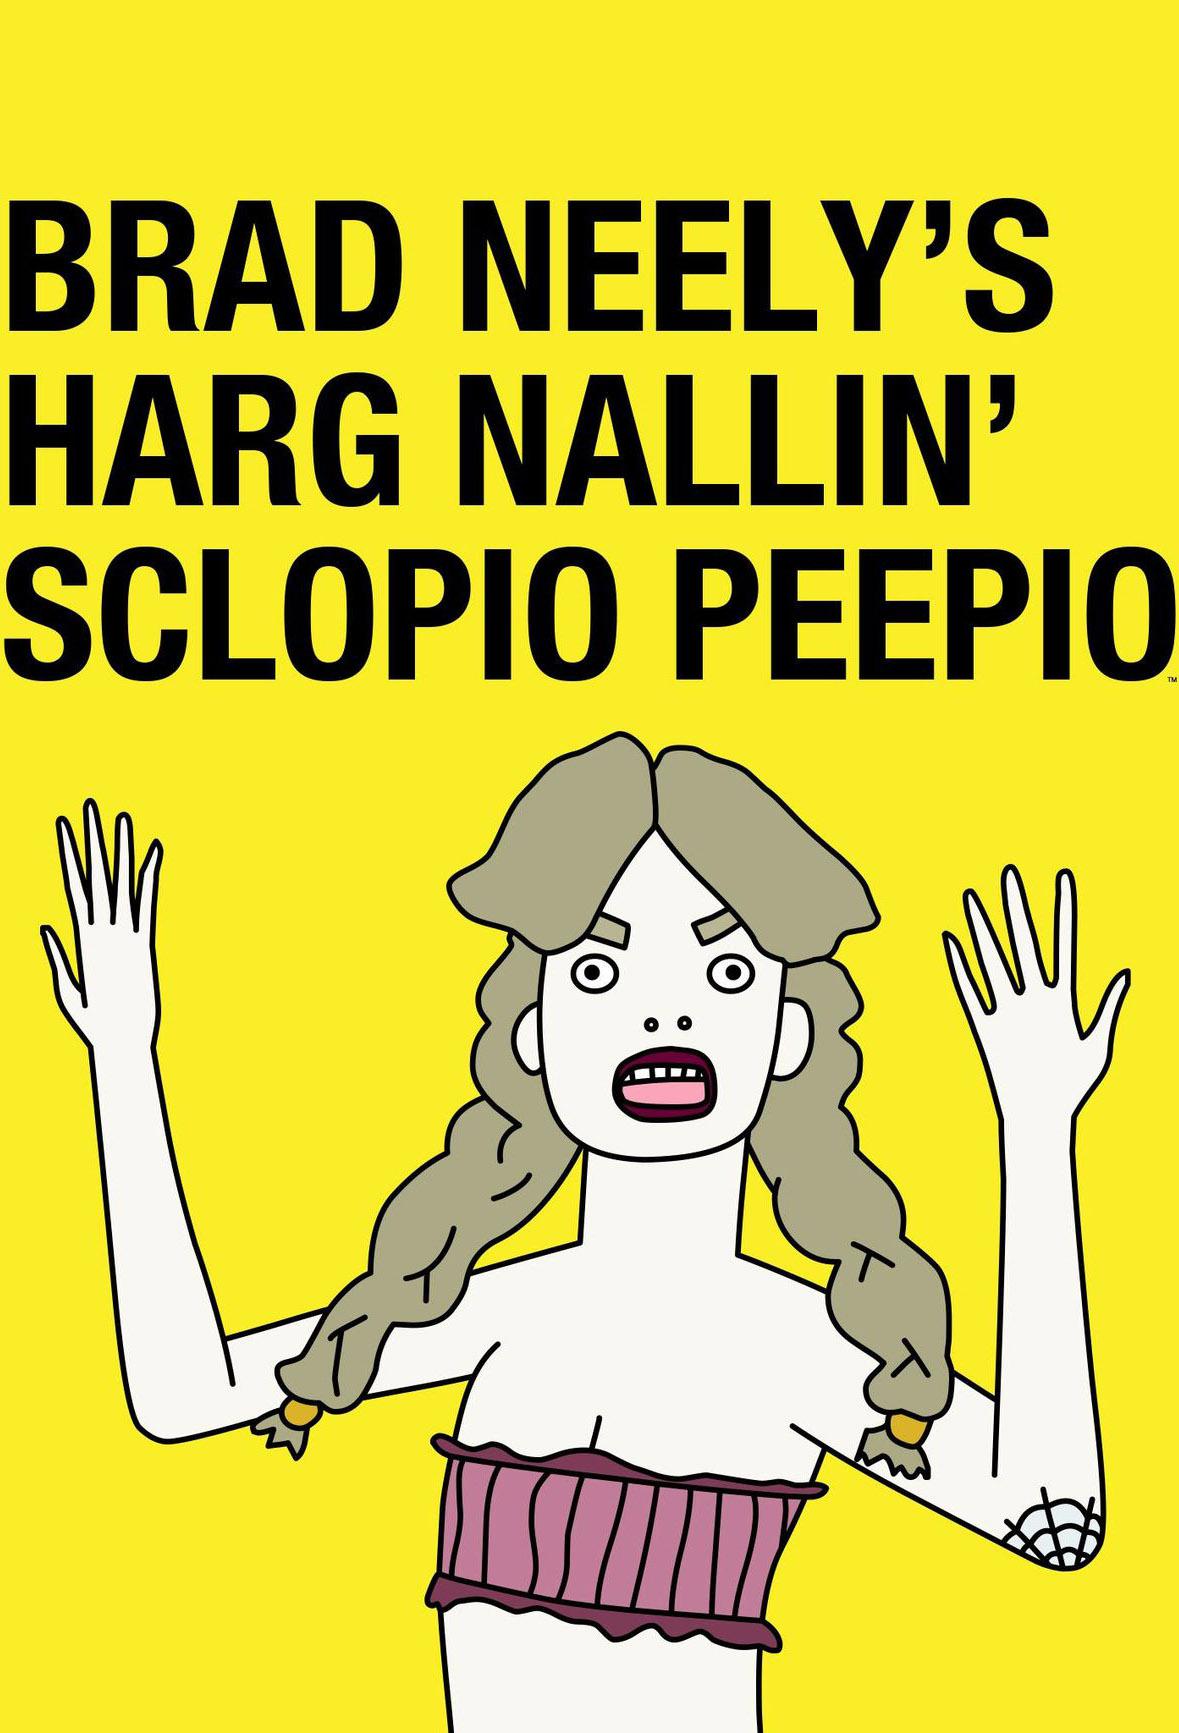 TV ratings for Brad Neely's Harg Nallin' Sclopio Peepio in New Zealand. Adult Swim TV series